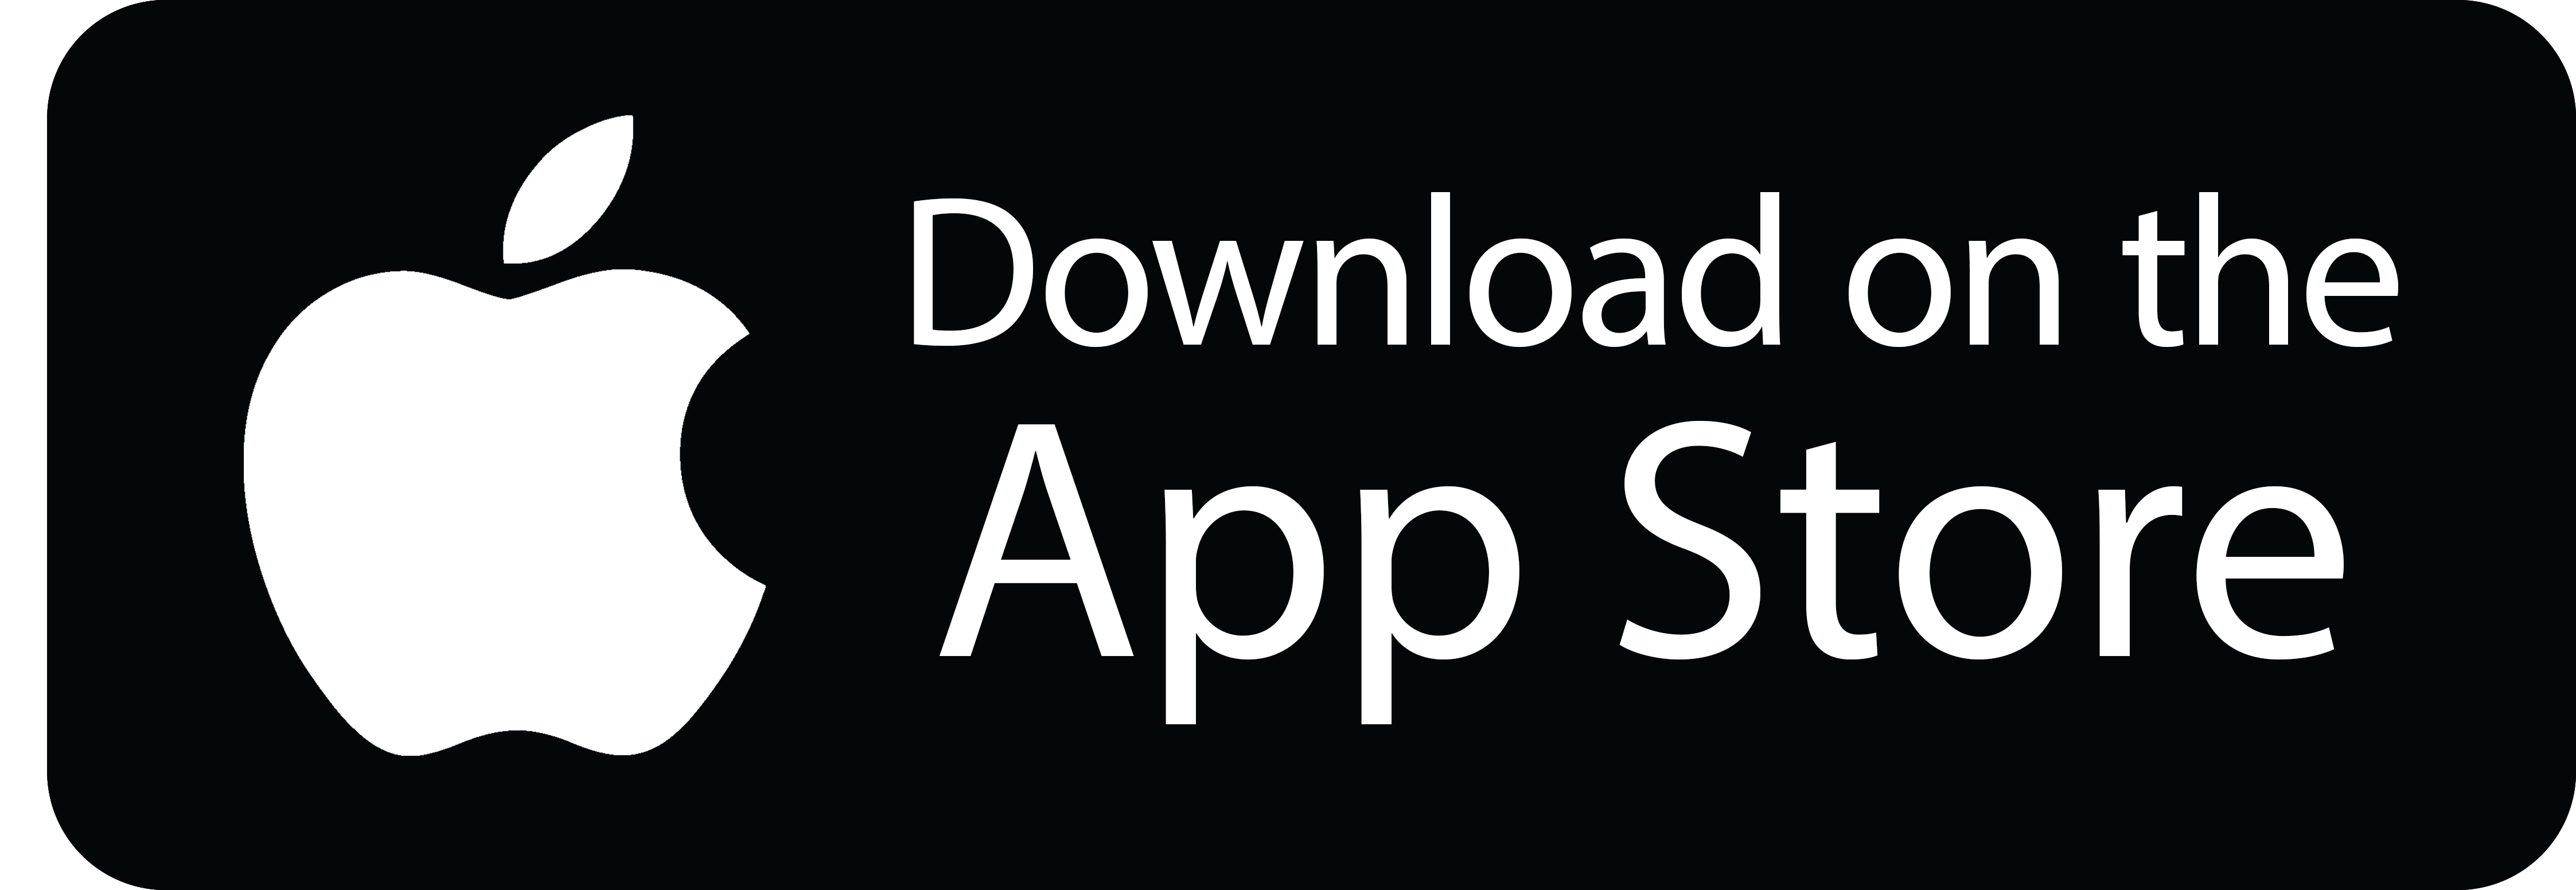 sride download at apple app store